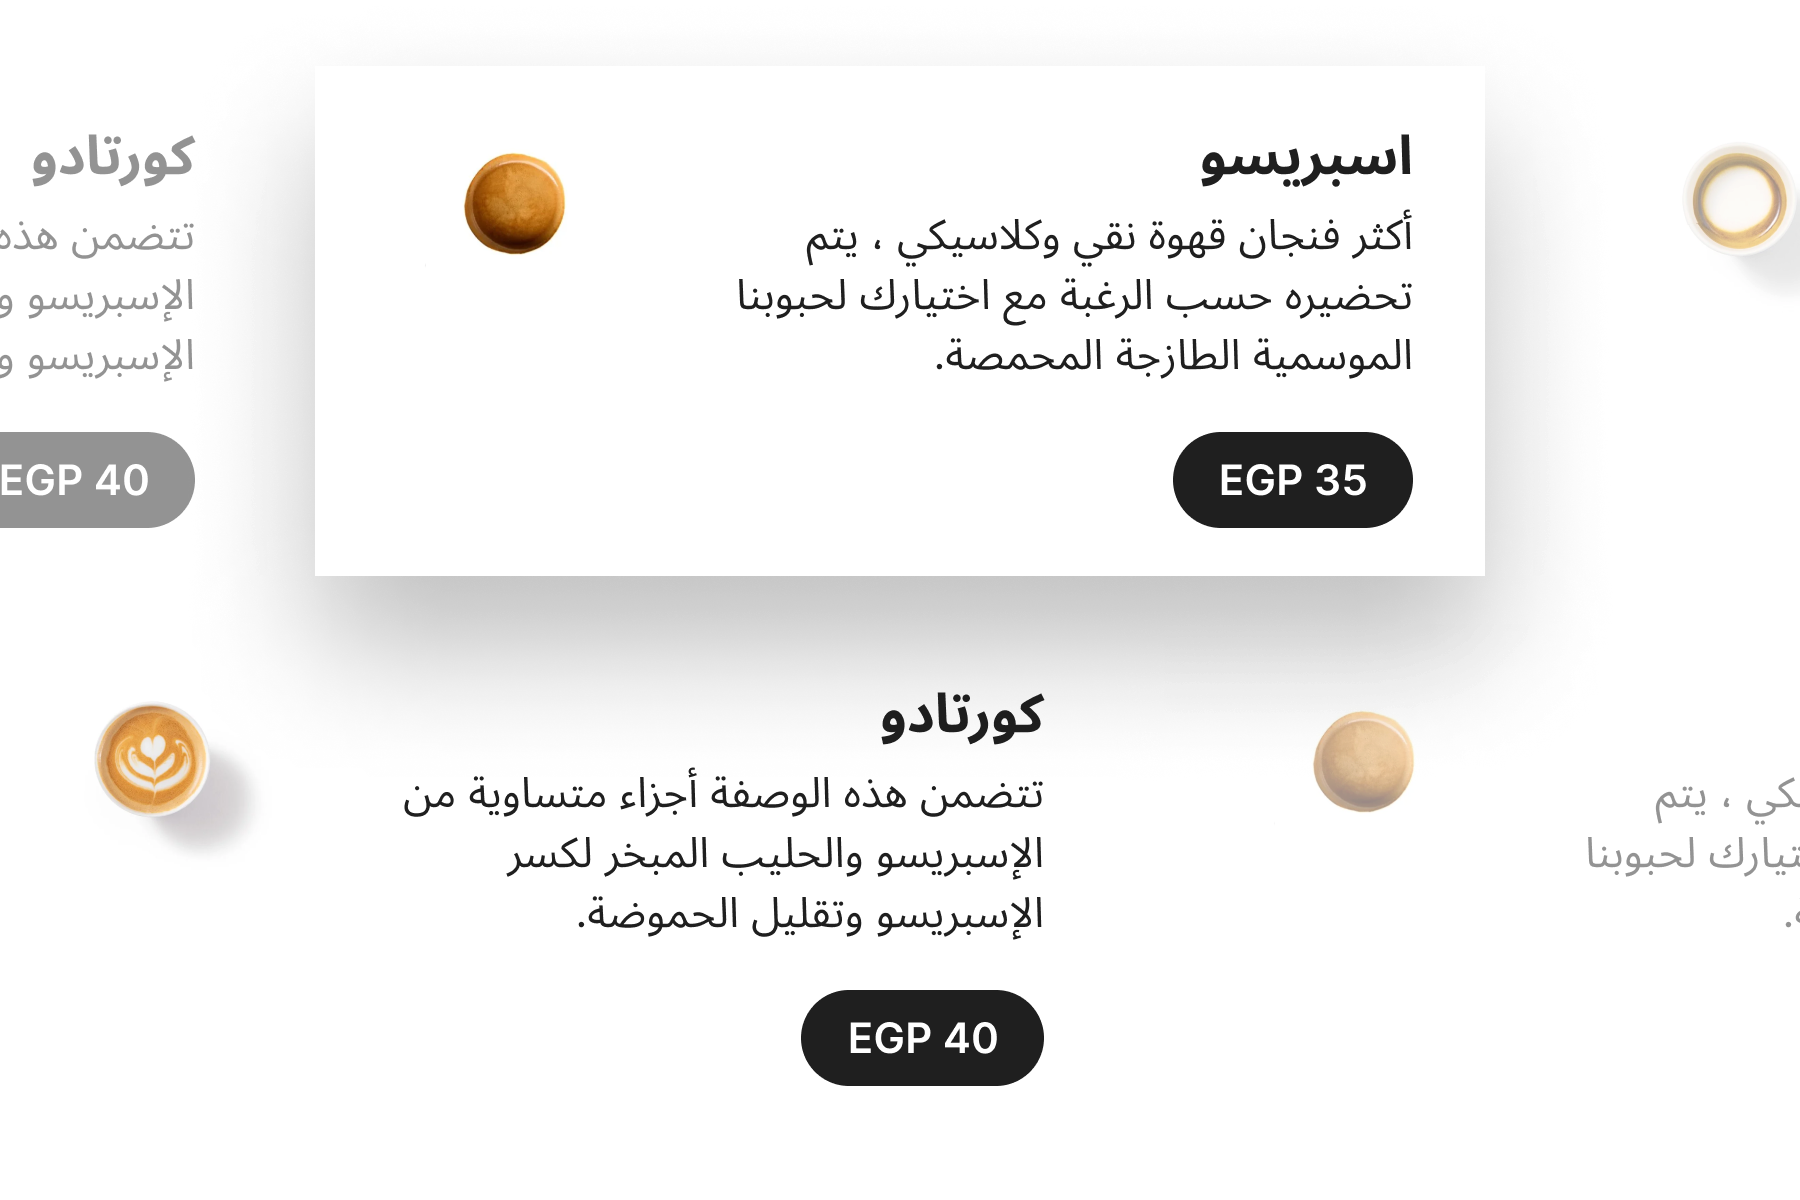 Zyda StoreFront in Arabic